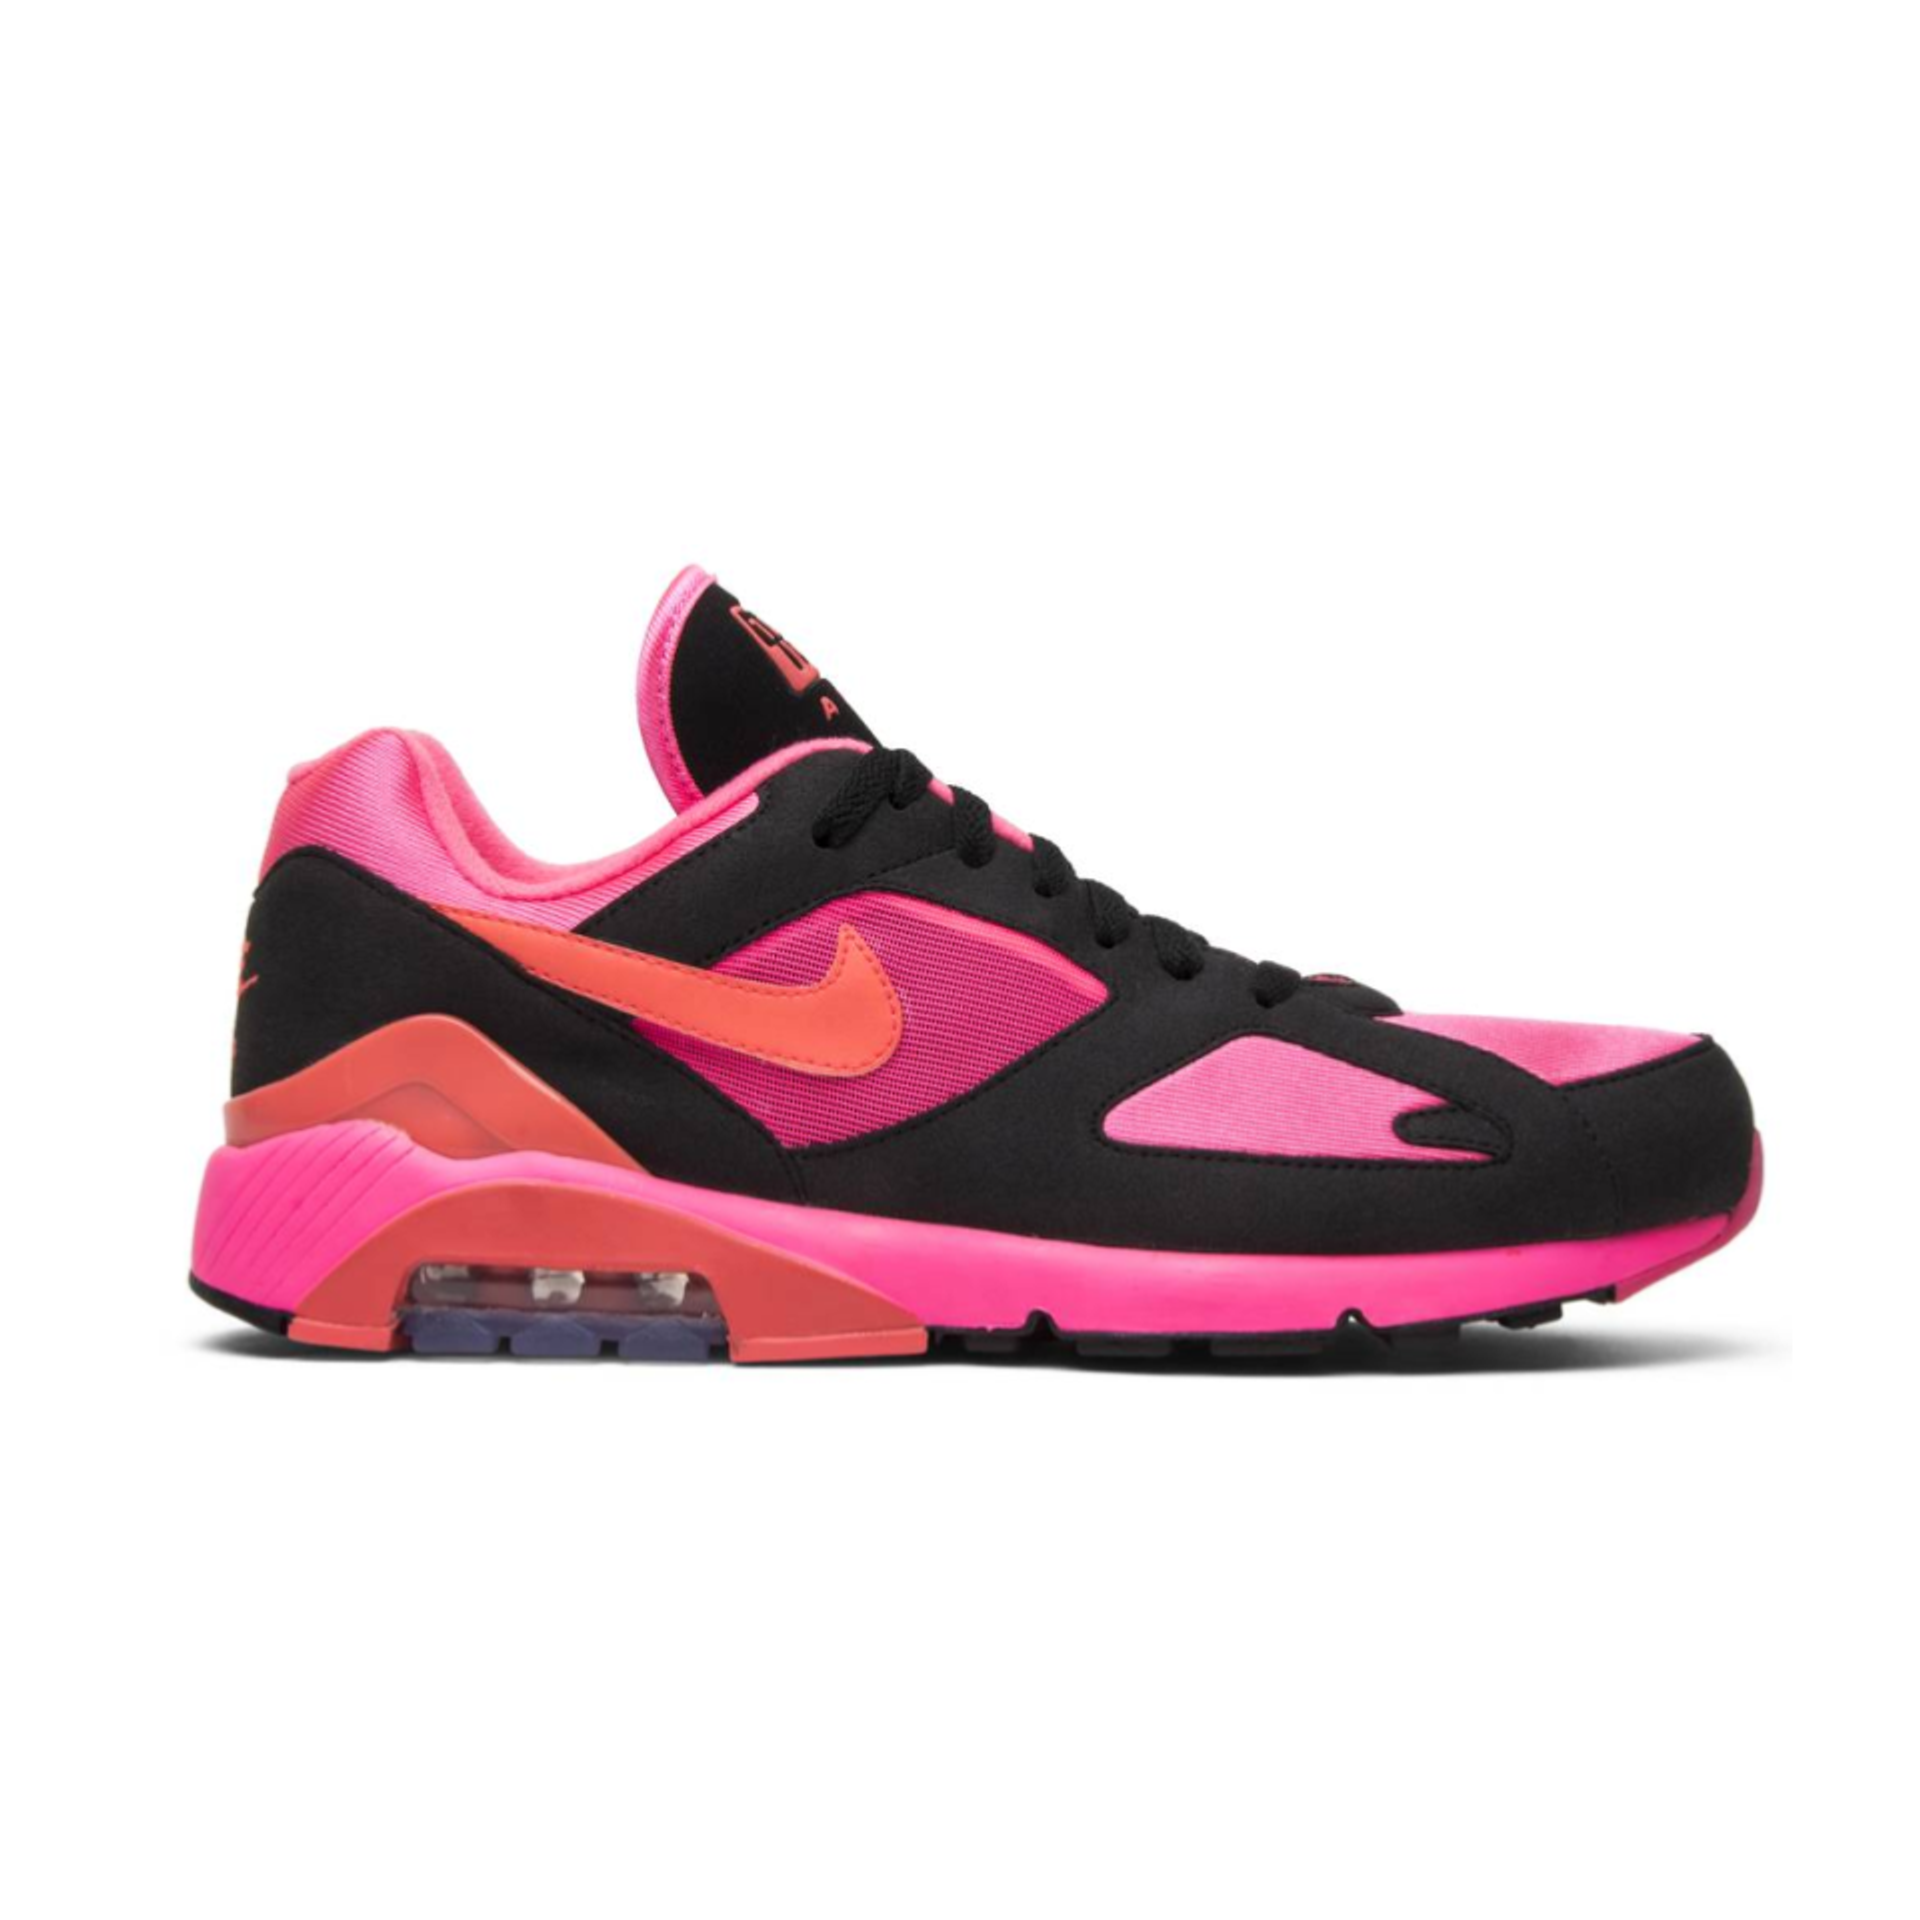 Nike Comme des Garcons x Air Max 180 'Black Pink'